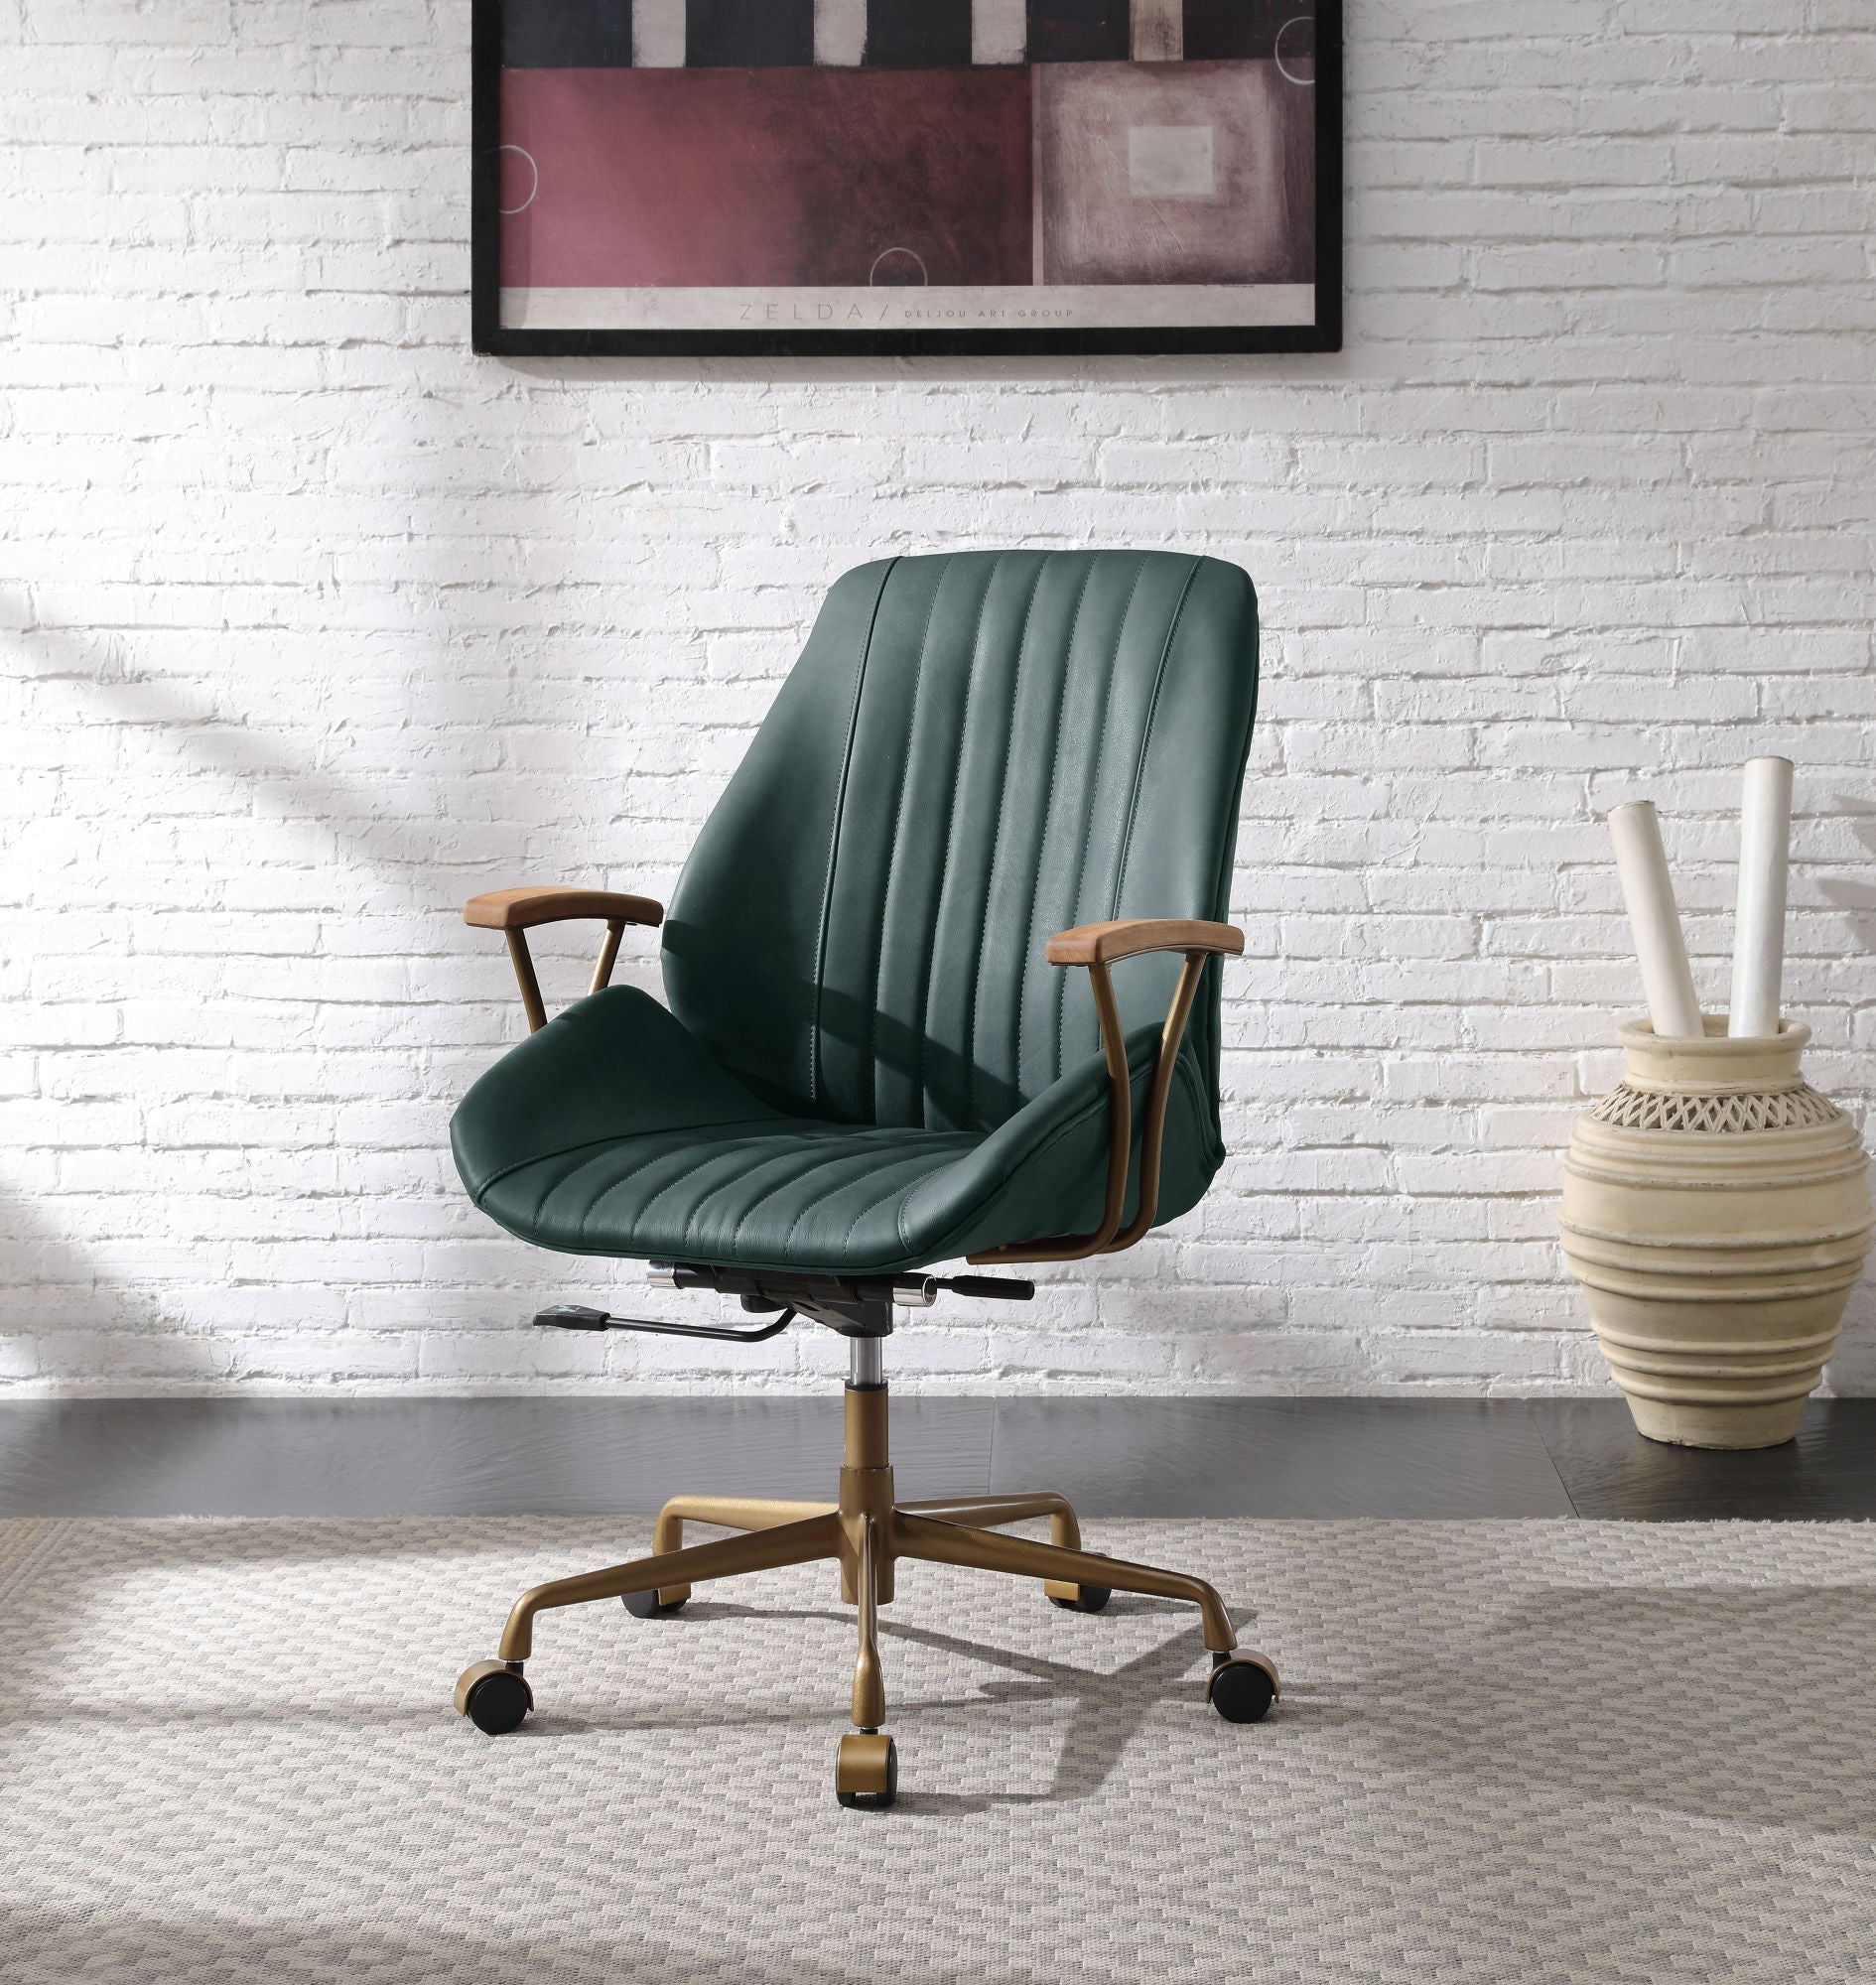 Hamilton Office Chair in Dark Green Finish 93240